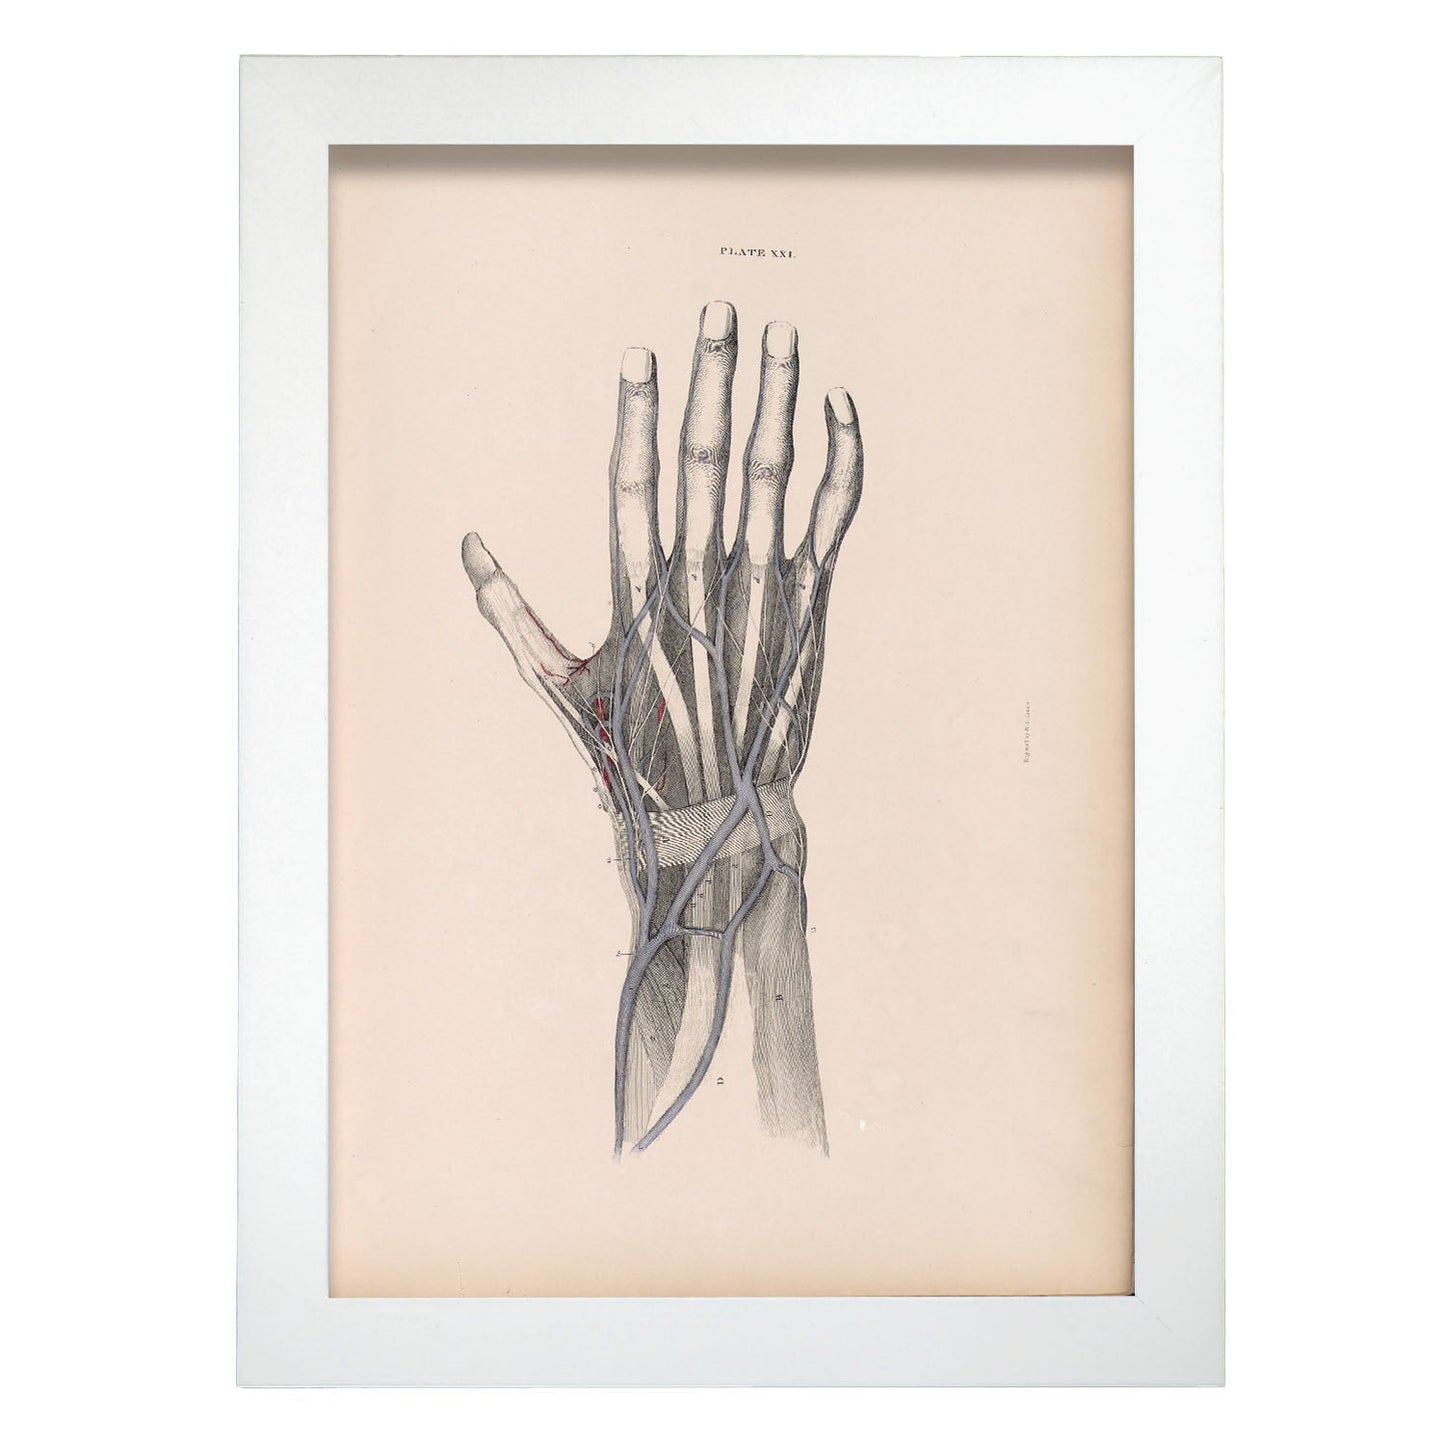 Dissection of the hand-Artwork-Nacnic-A4-Marco Blanco-Nacnic Estudio SL